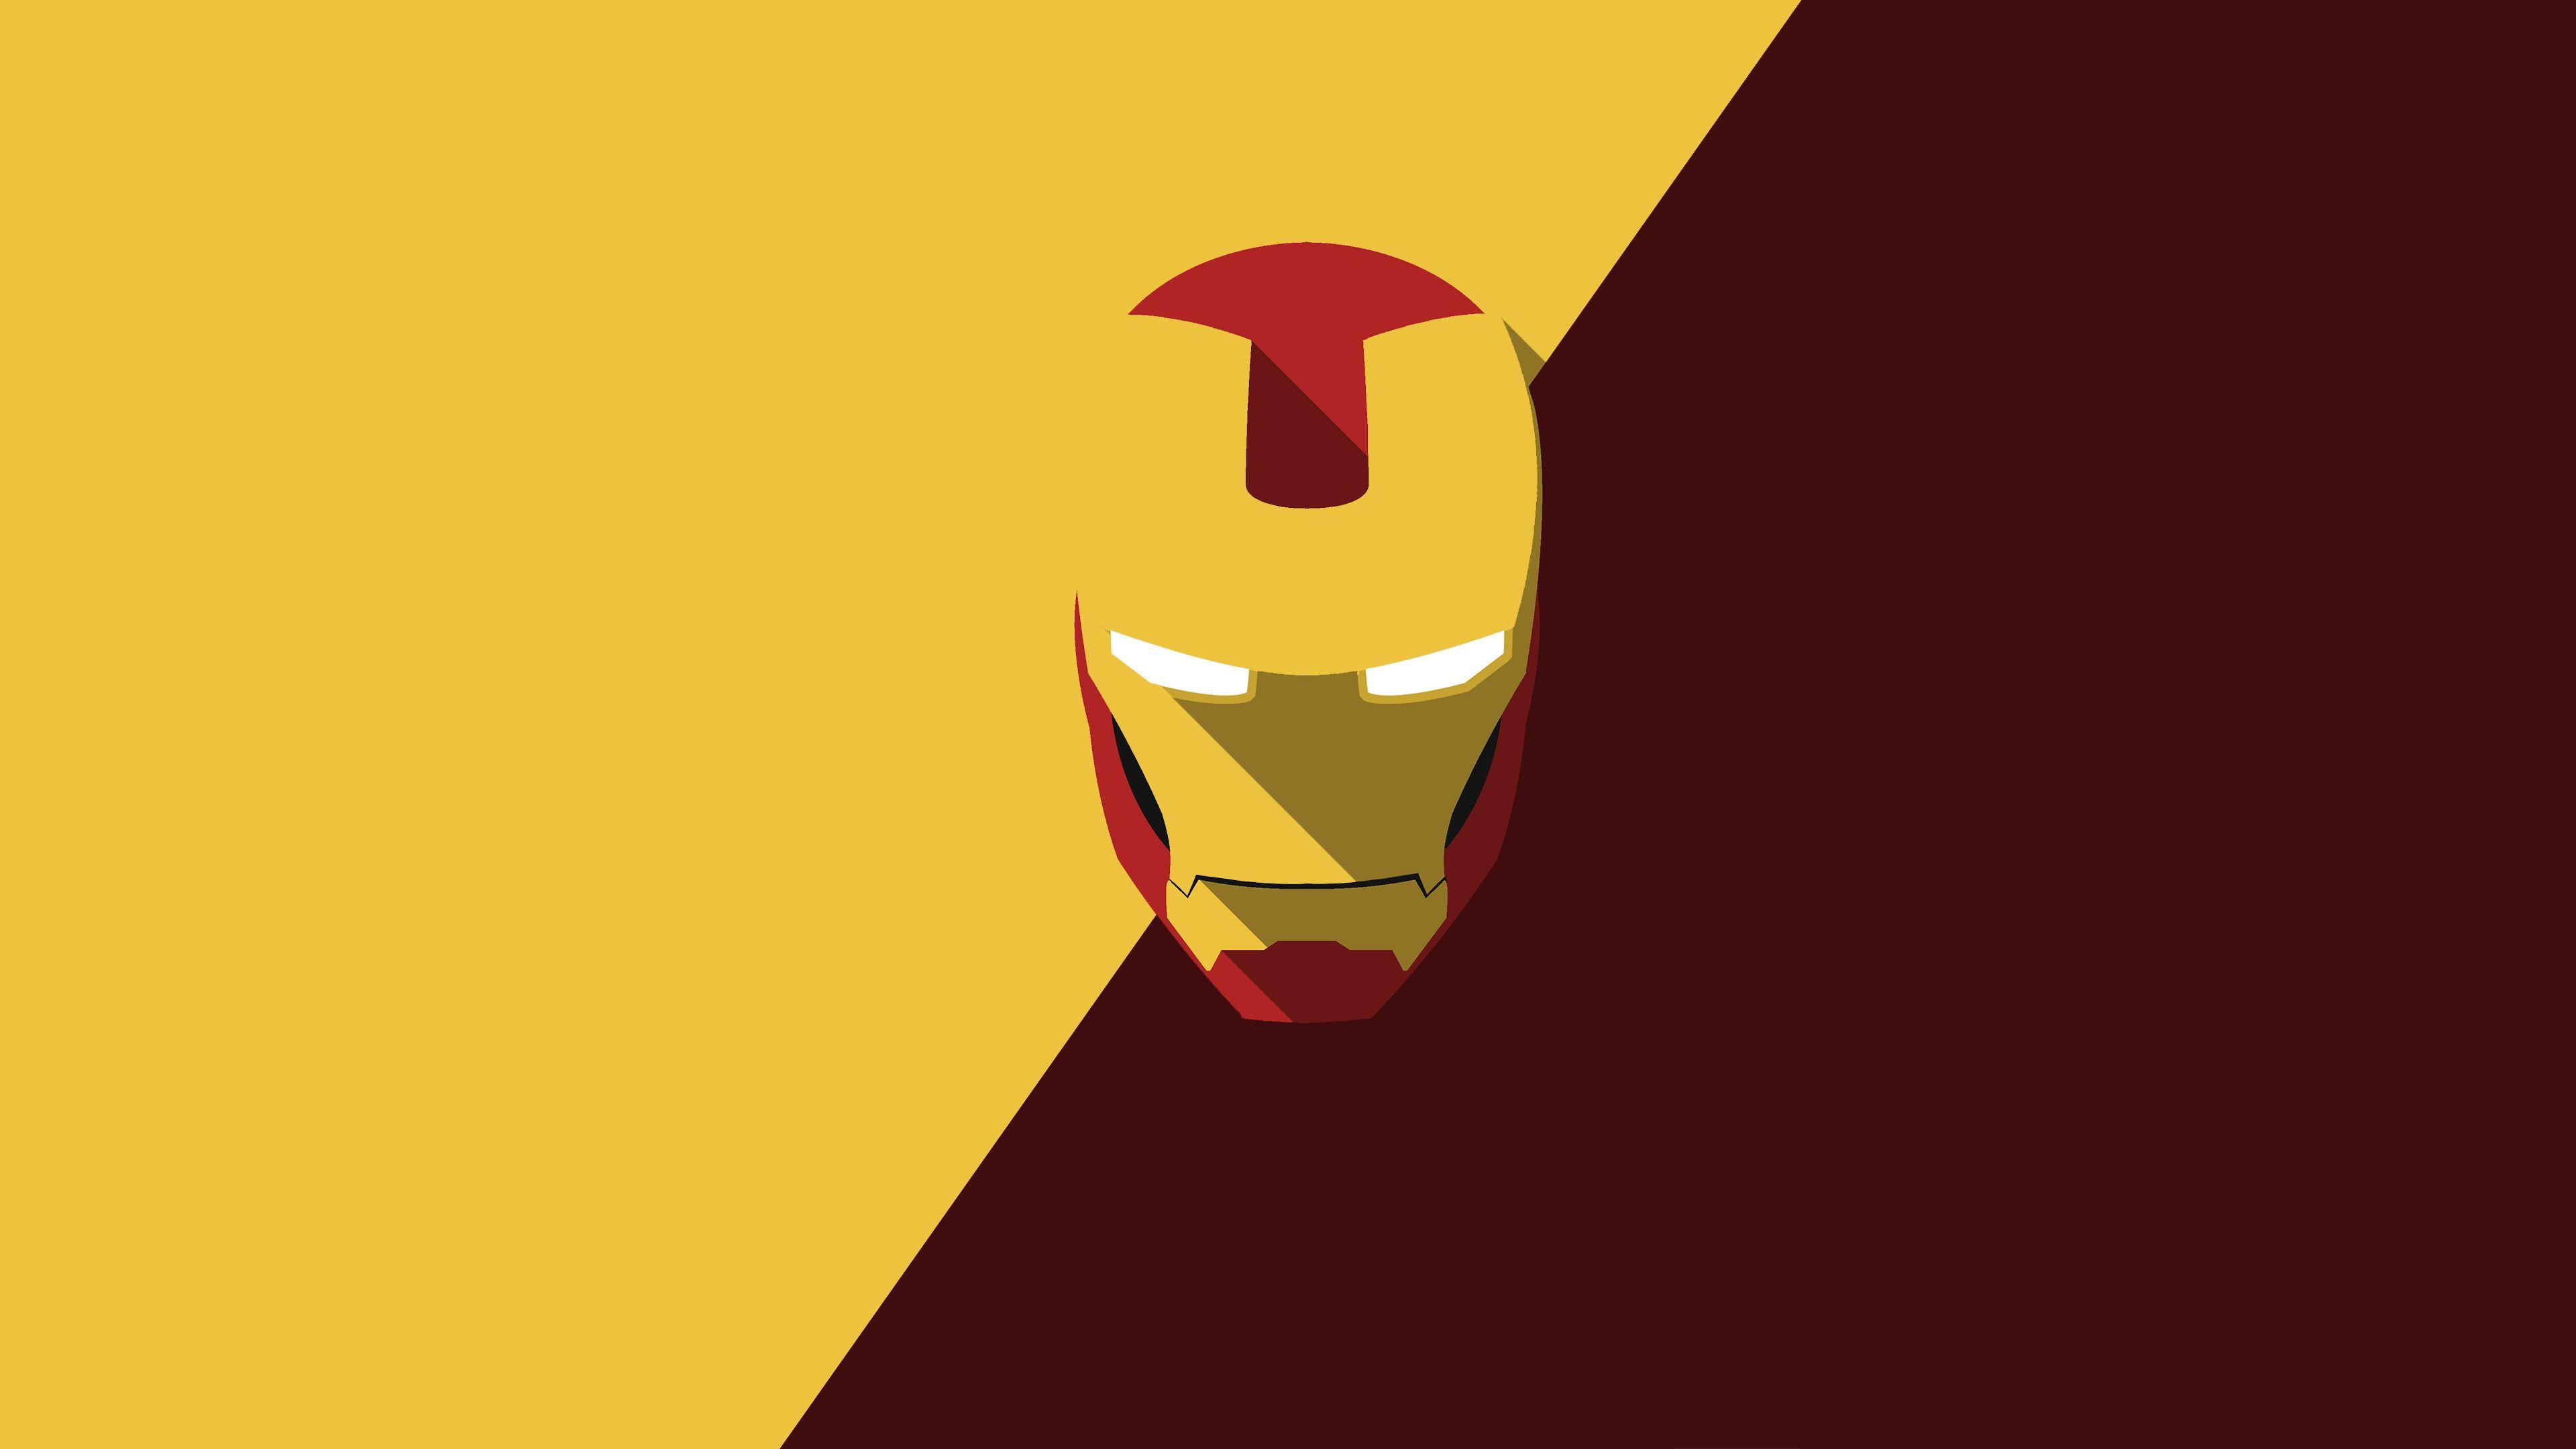 Iron Man Minimalism 4k 2018 Superheroes Wallpaper, Minimalism Wallpaper, Iron Man Wallpaper, Hd Wallpaper, Digita. Iron Man Wallpaper, Man Wallpaper, Iron Man